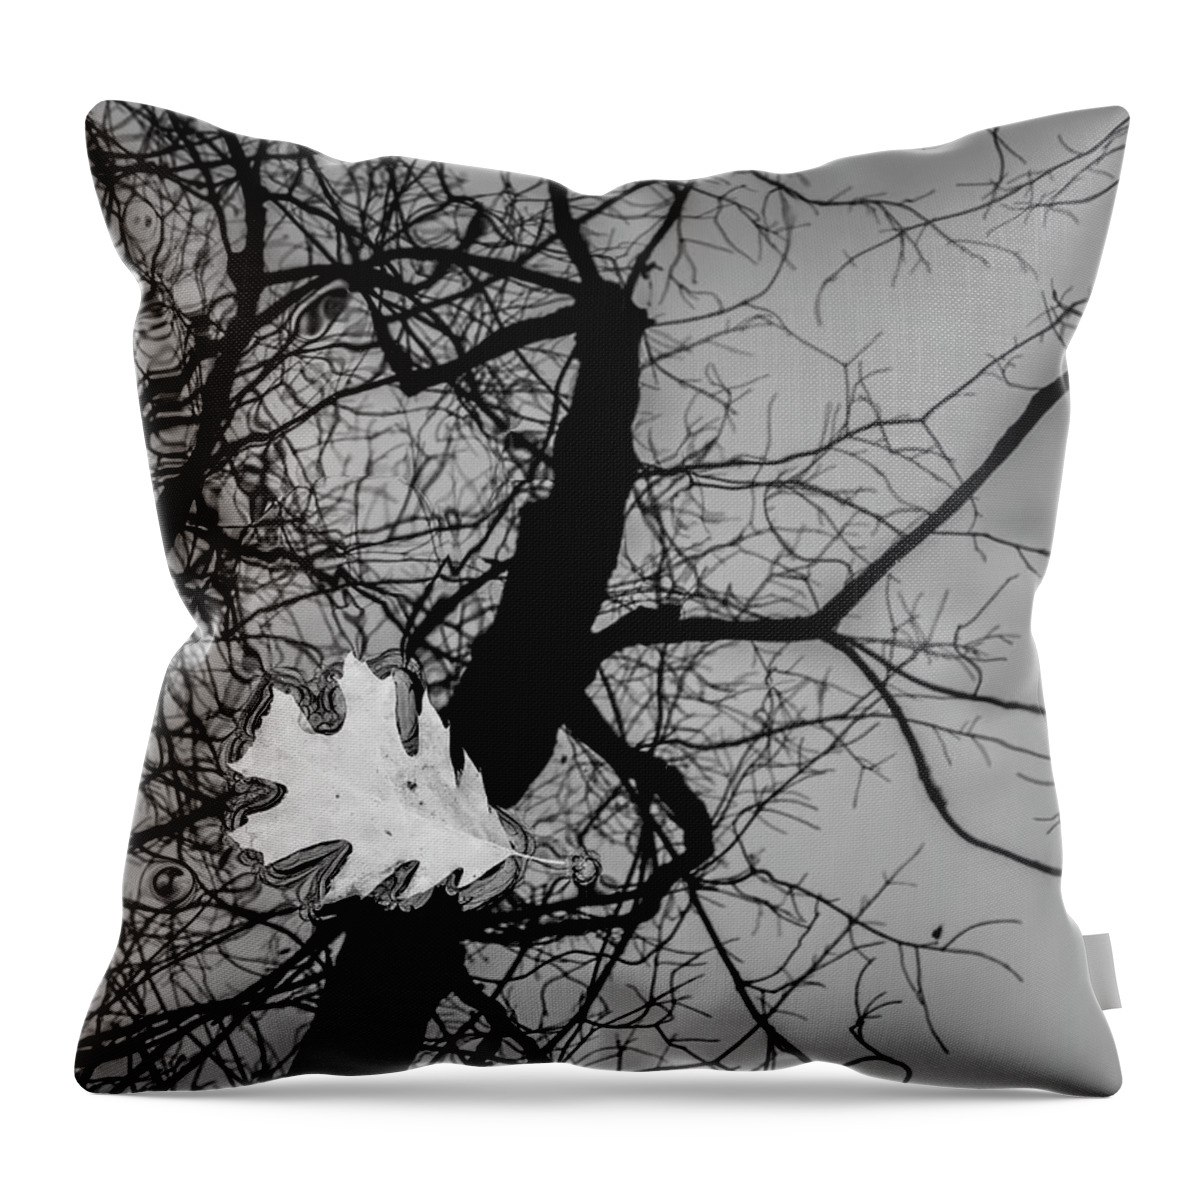 Black And White Throw Pillow featuring the photograph Boyden XXI BW by David Gordon